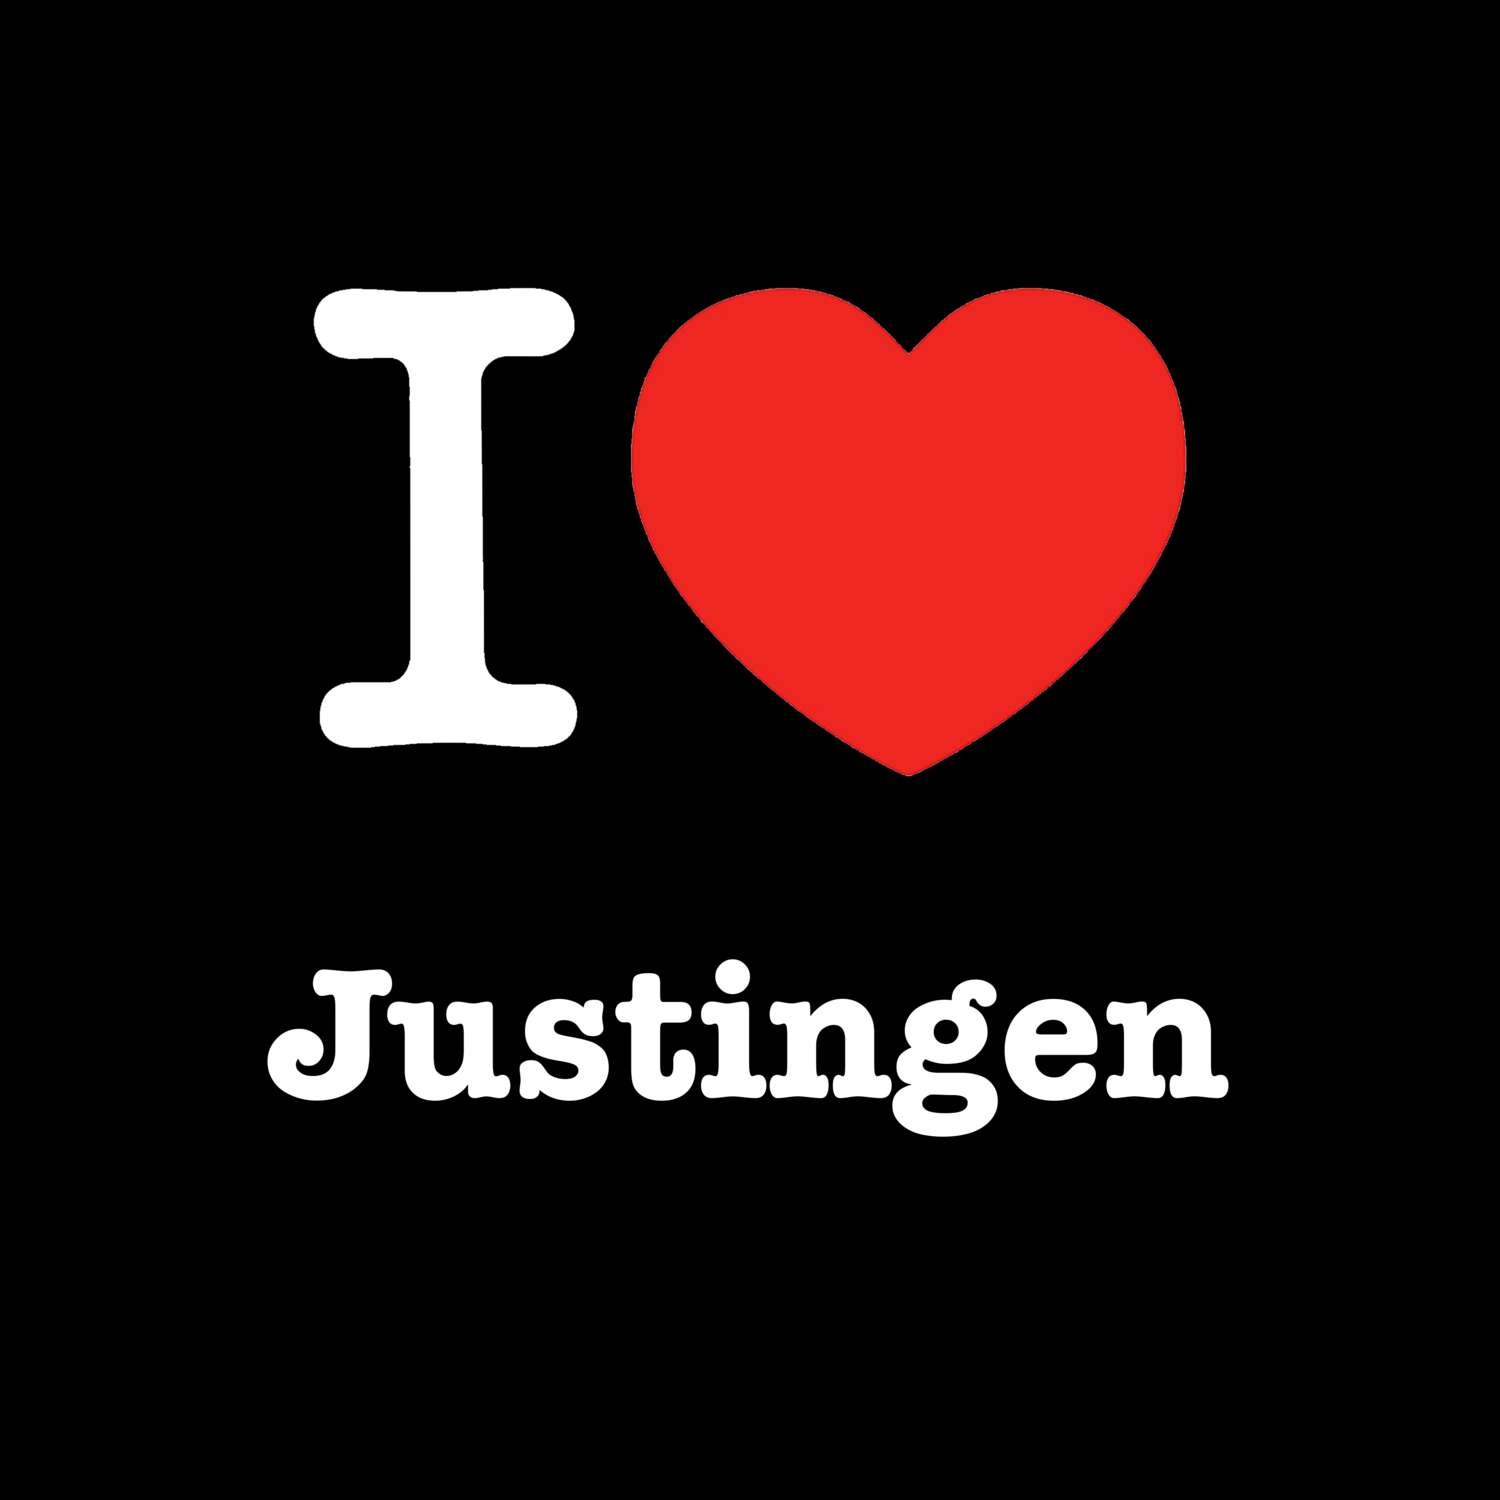 Justingen T-Shirt »I love«